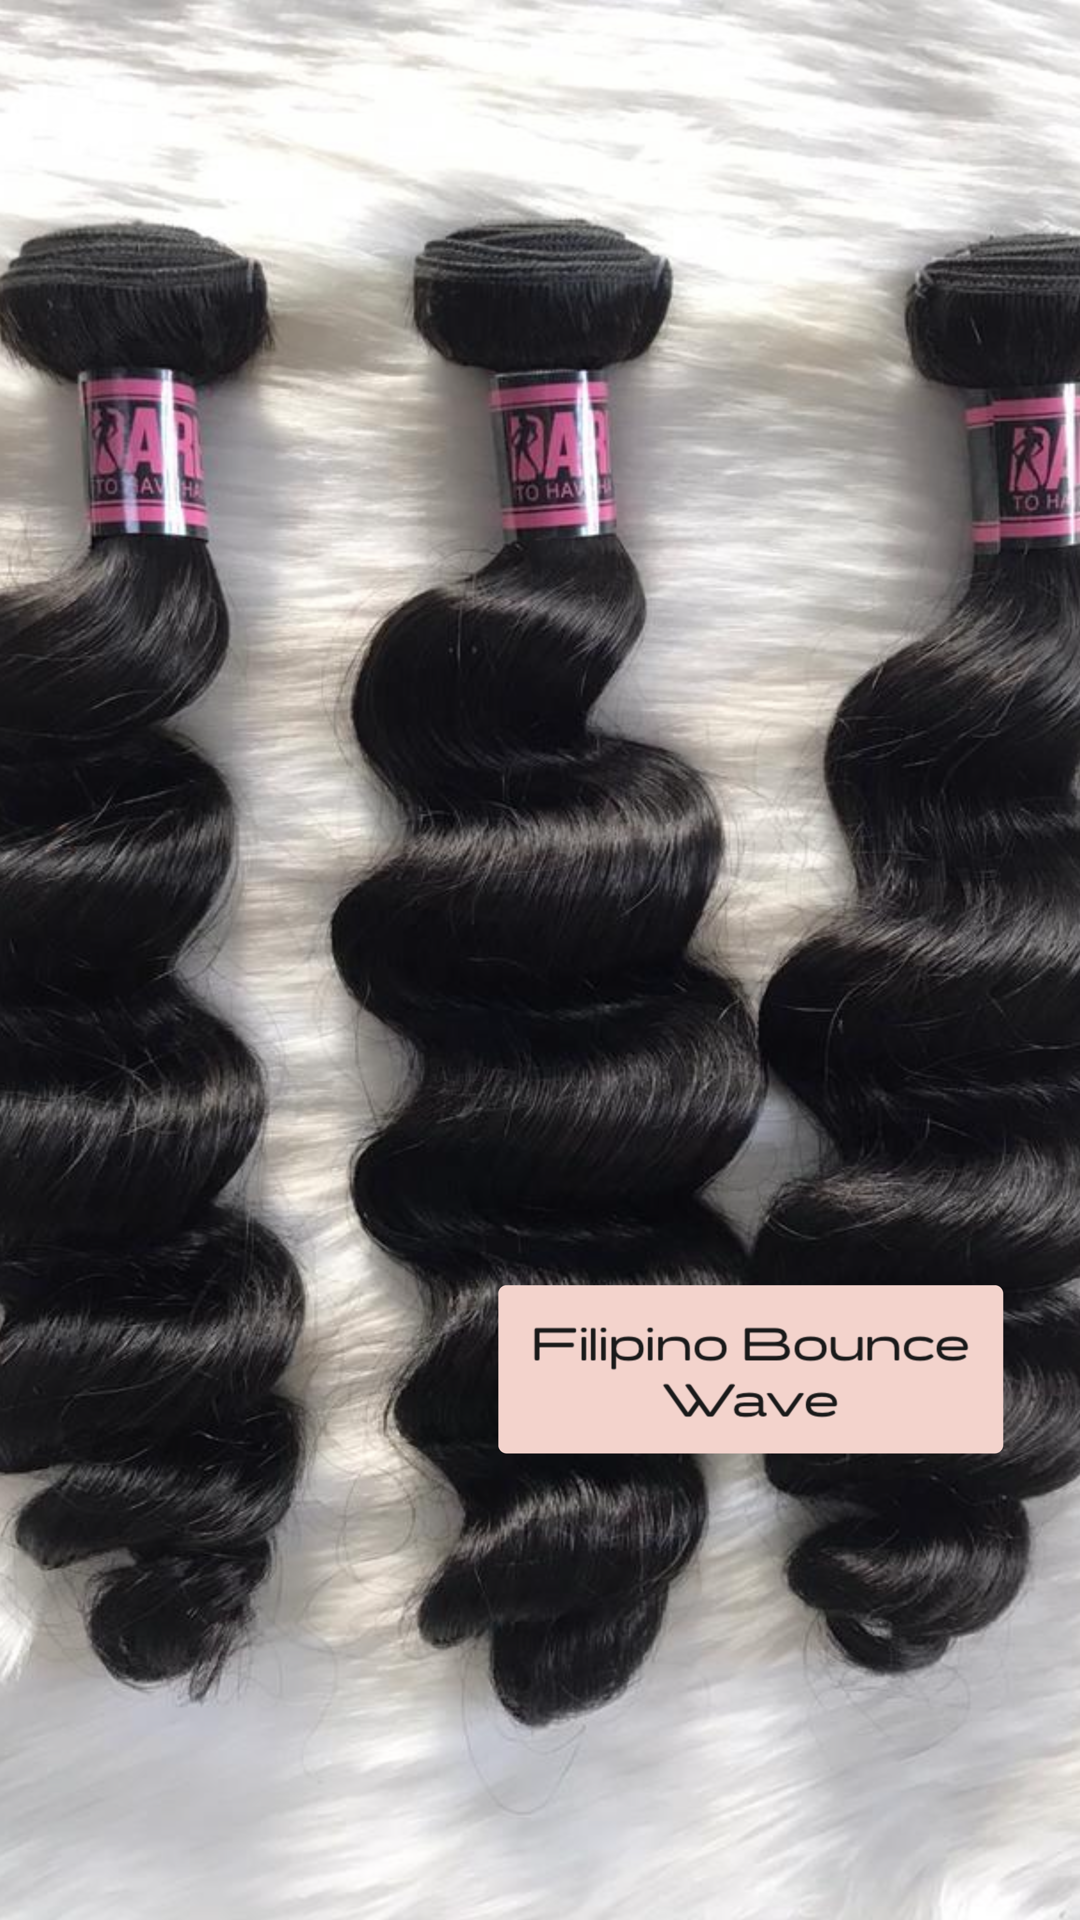 Filipino Bounce Wave Hair Bundles